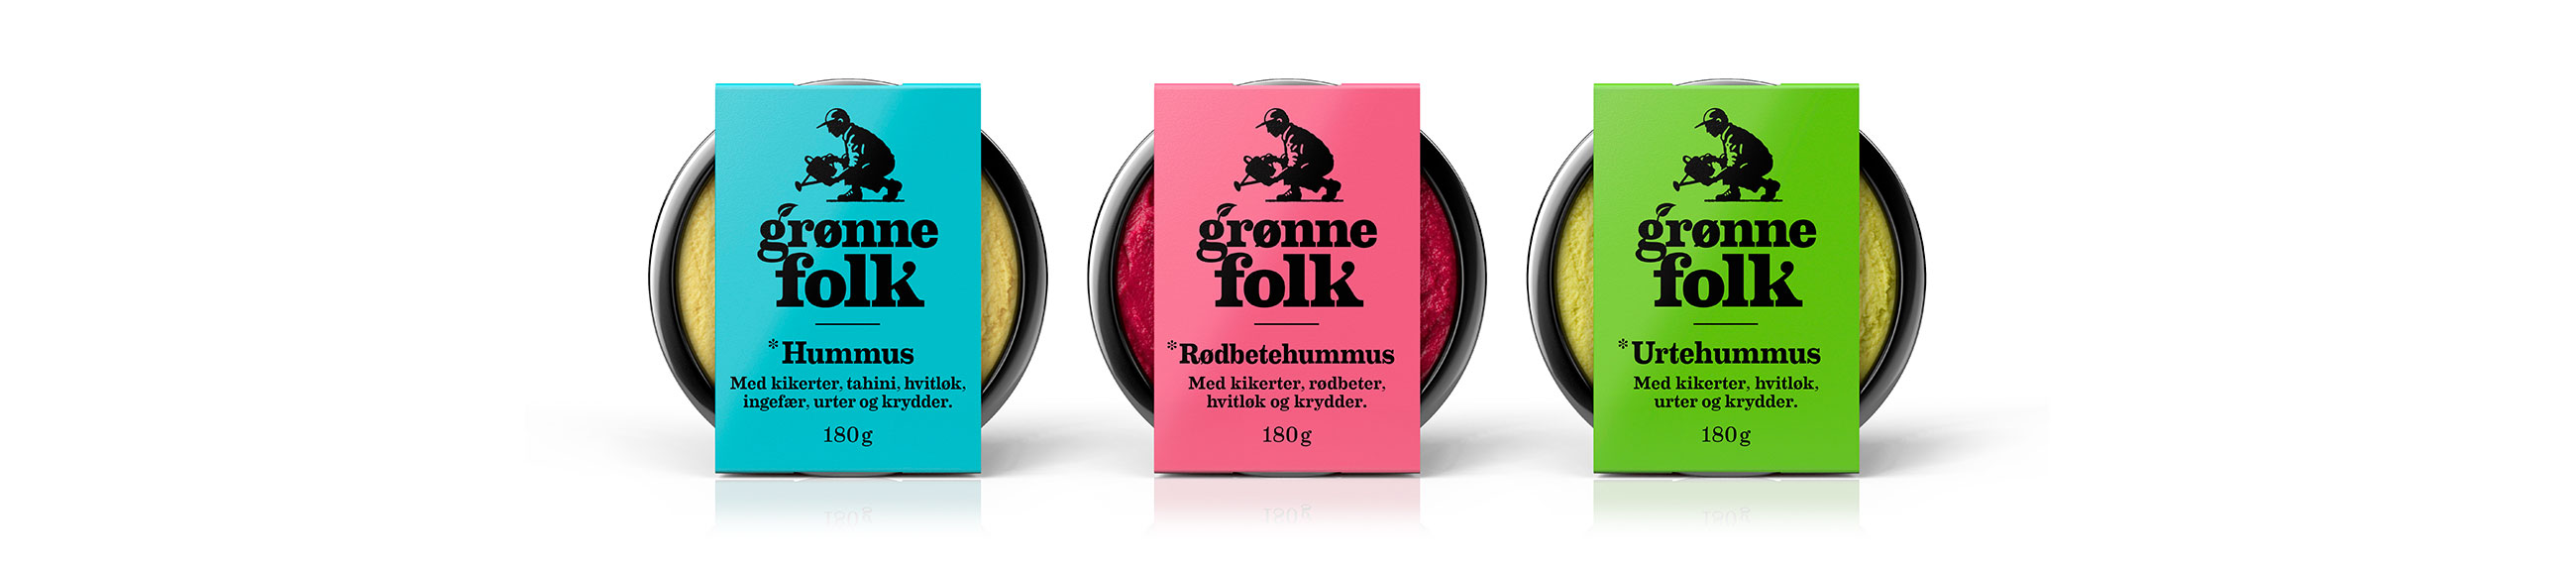 Grønne Folk Hummus, Rødbetehummus og Urtehummus. Emballasje packaging design.